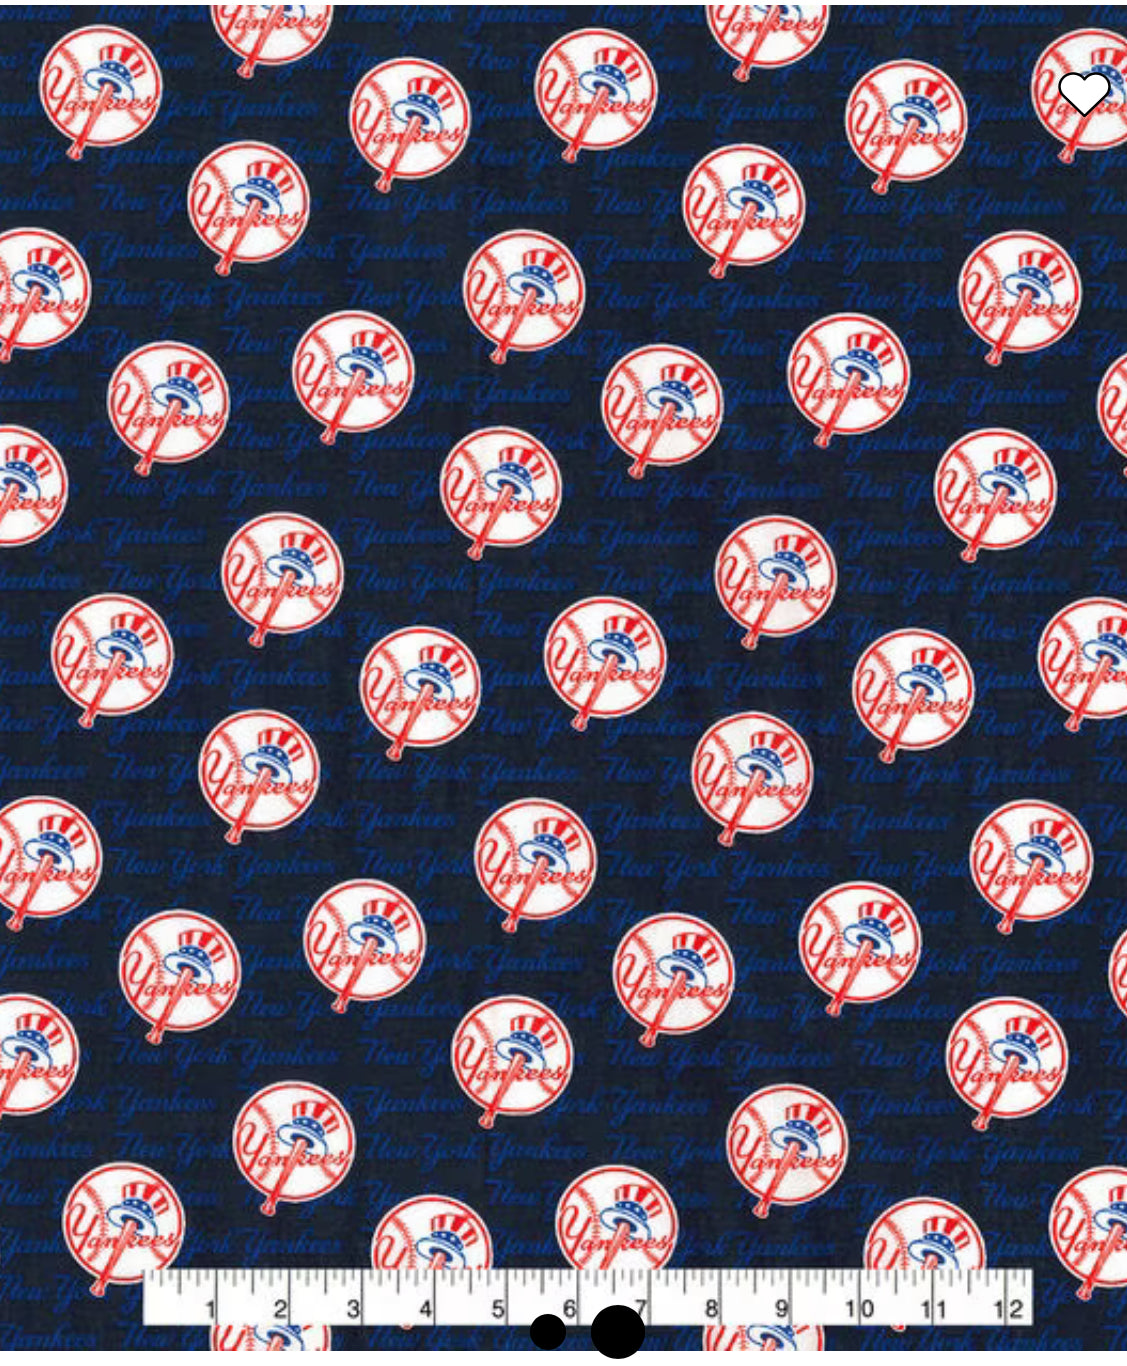 Custom Handmade Jeff Cap in New York Yankees Dot Print Fabric